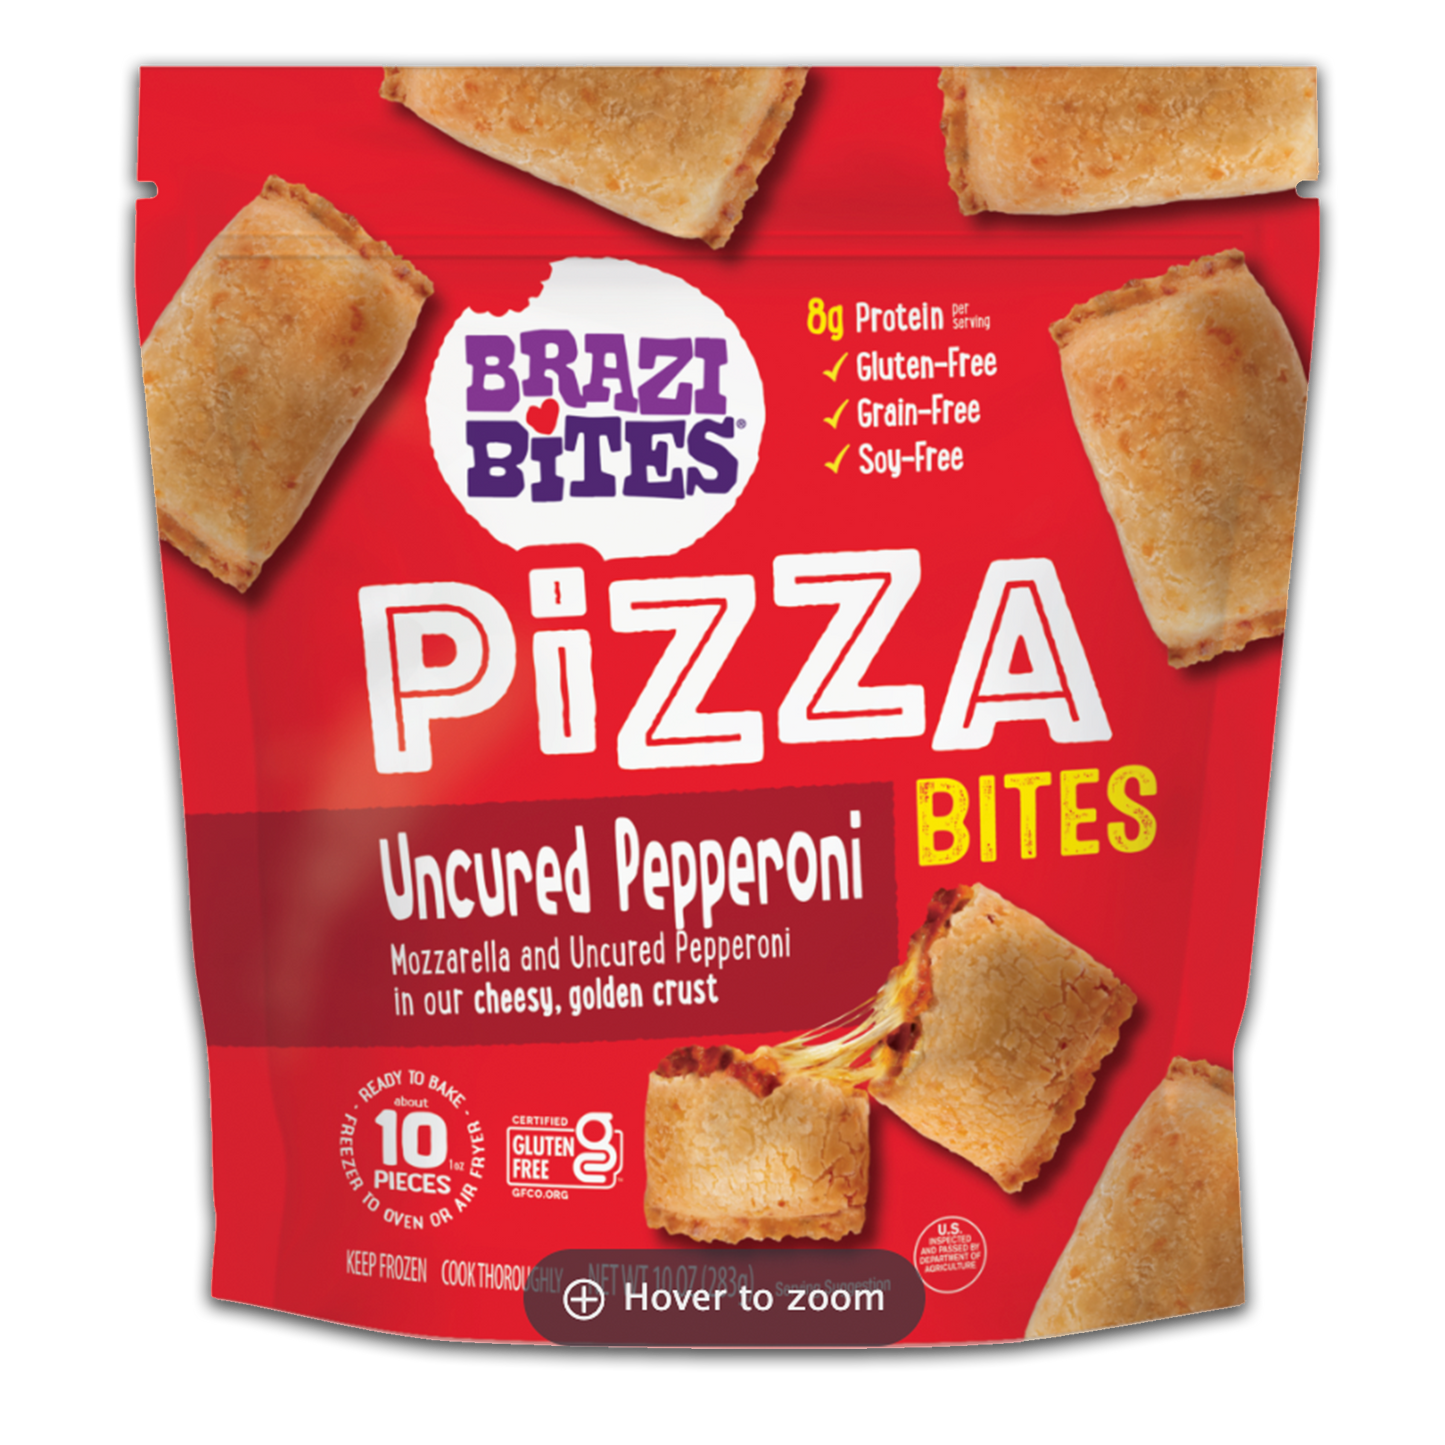 Brazi Bites Pepperoni Pizza Bites- front of packaging